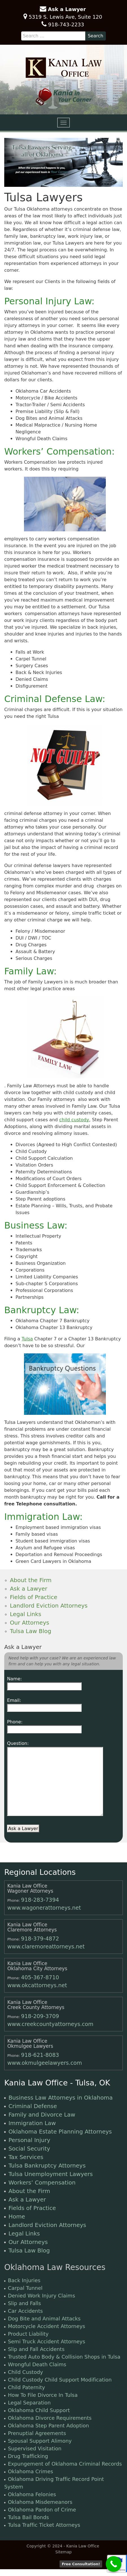 Kania Law Office: Tulsa Oklahoma Lawyers - Tulsa OK Lawyers